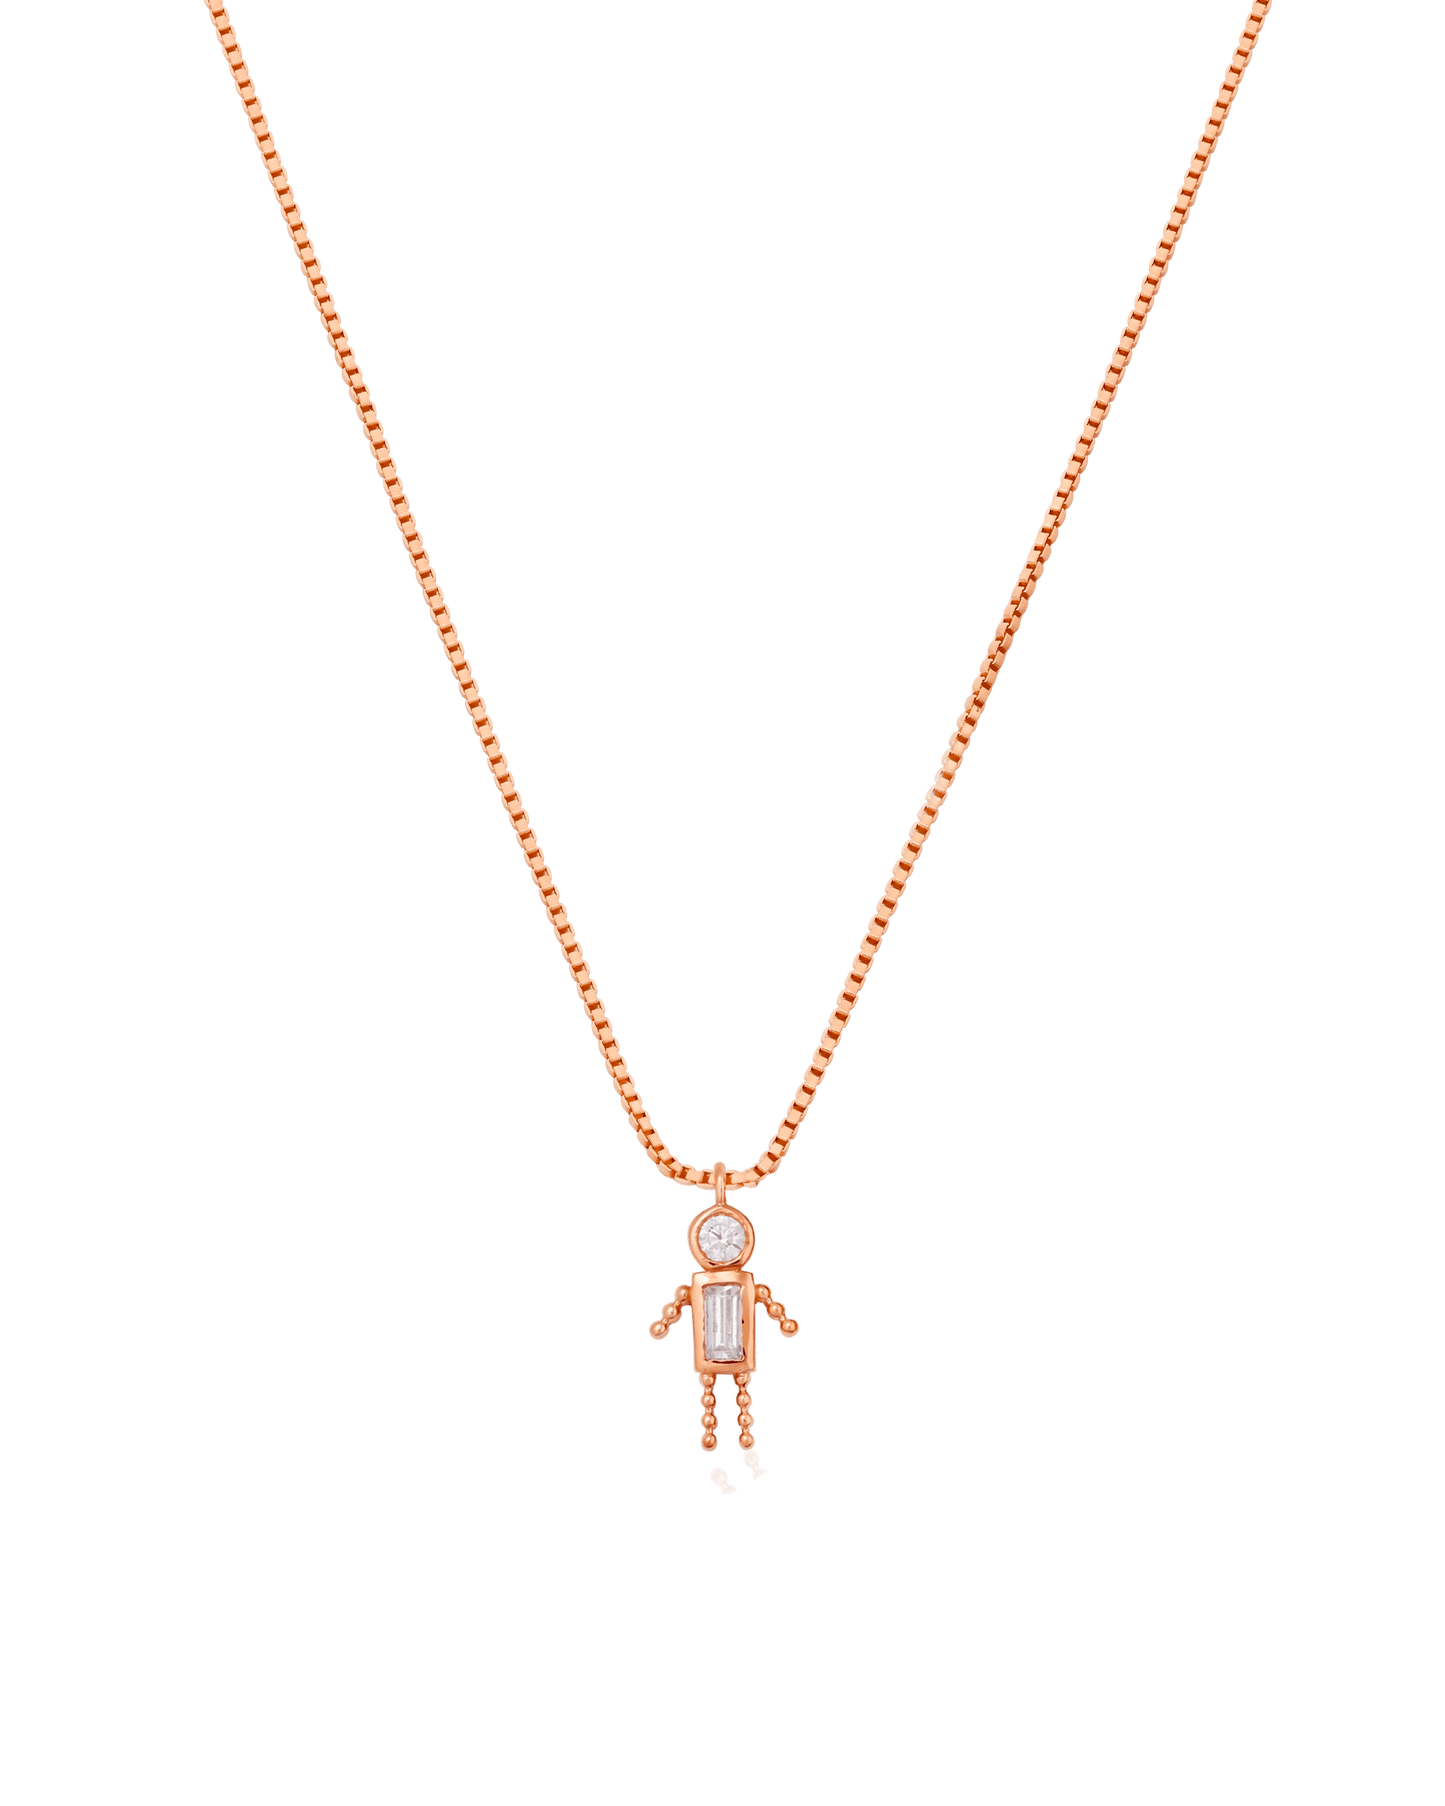 Single Mini Me Necklace - 18K Rose Vermeil Necklaces magal-dev 1 Small - 16" 